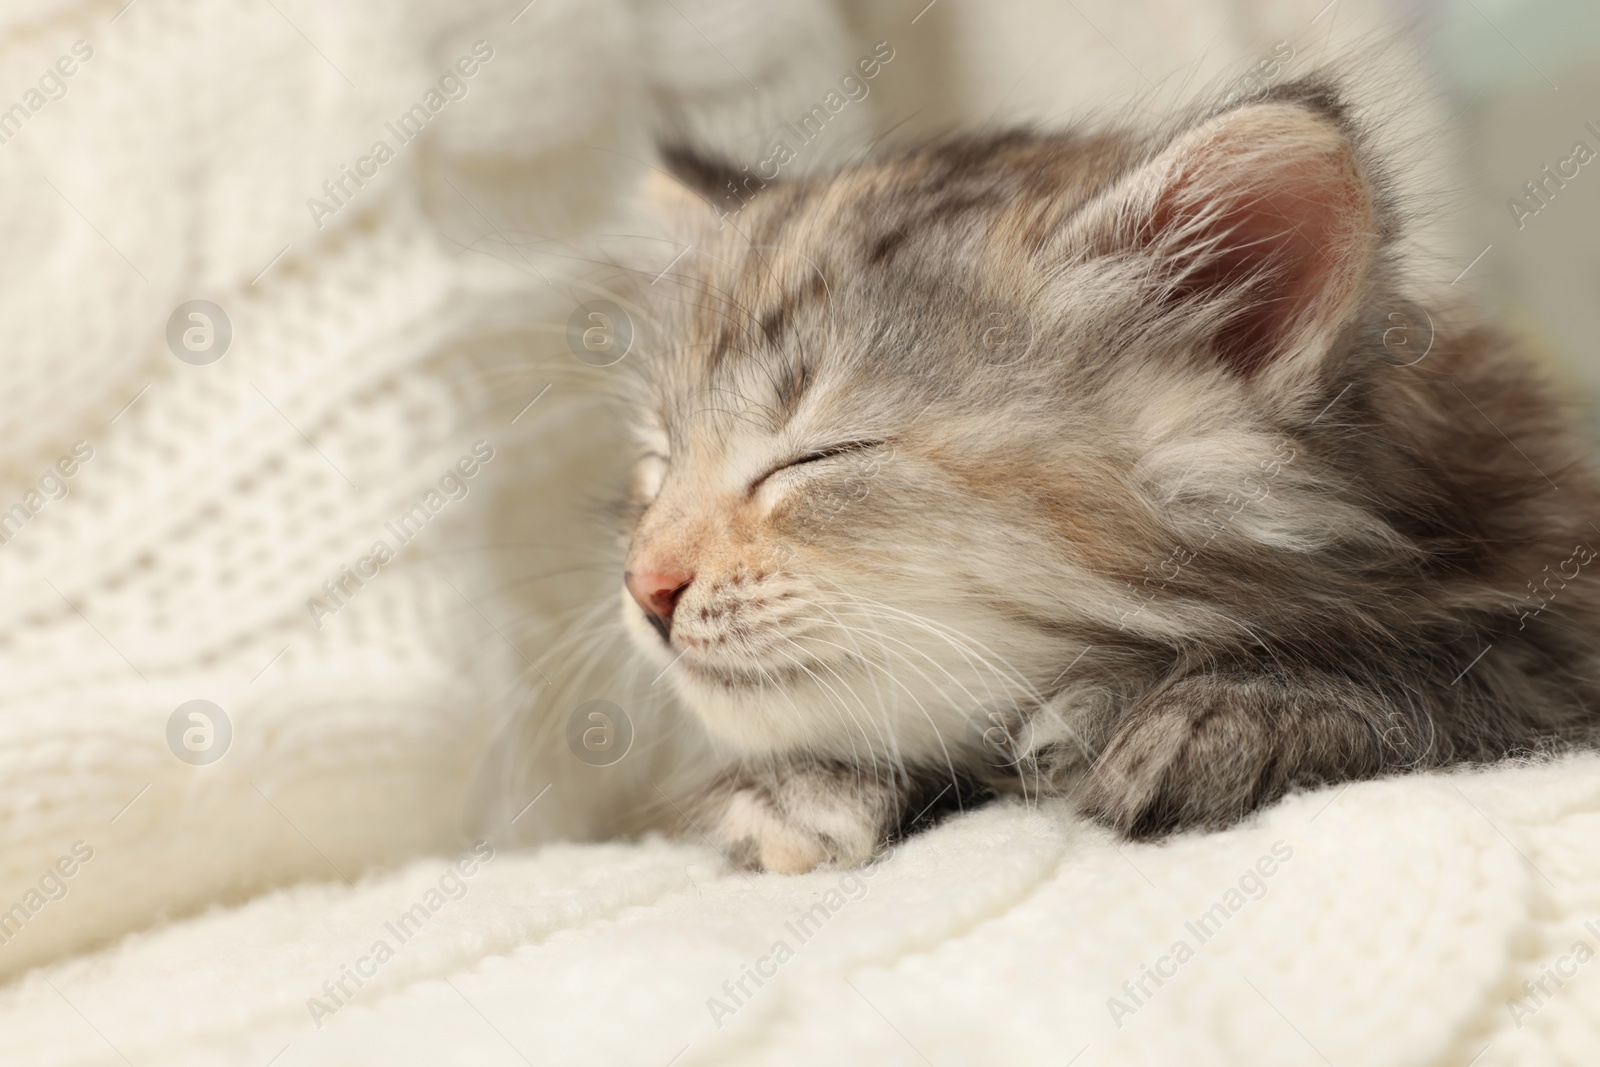 Photo of Cute kitten sleeping on white knitted blanket